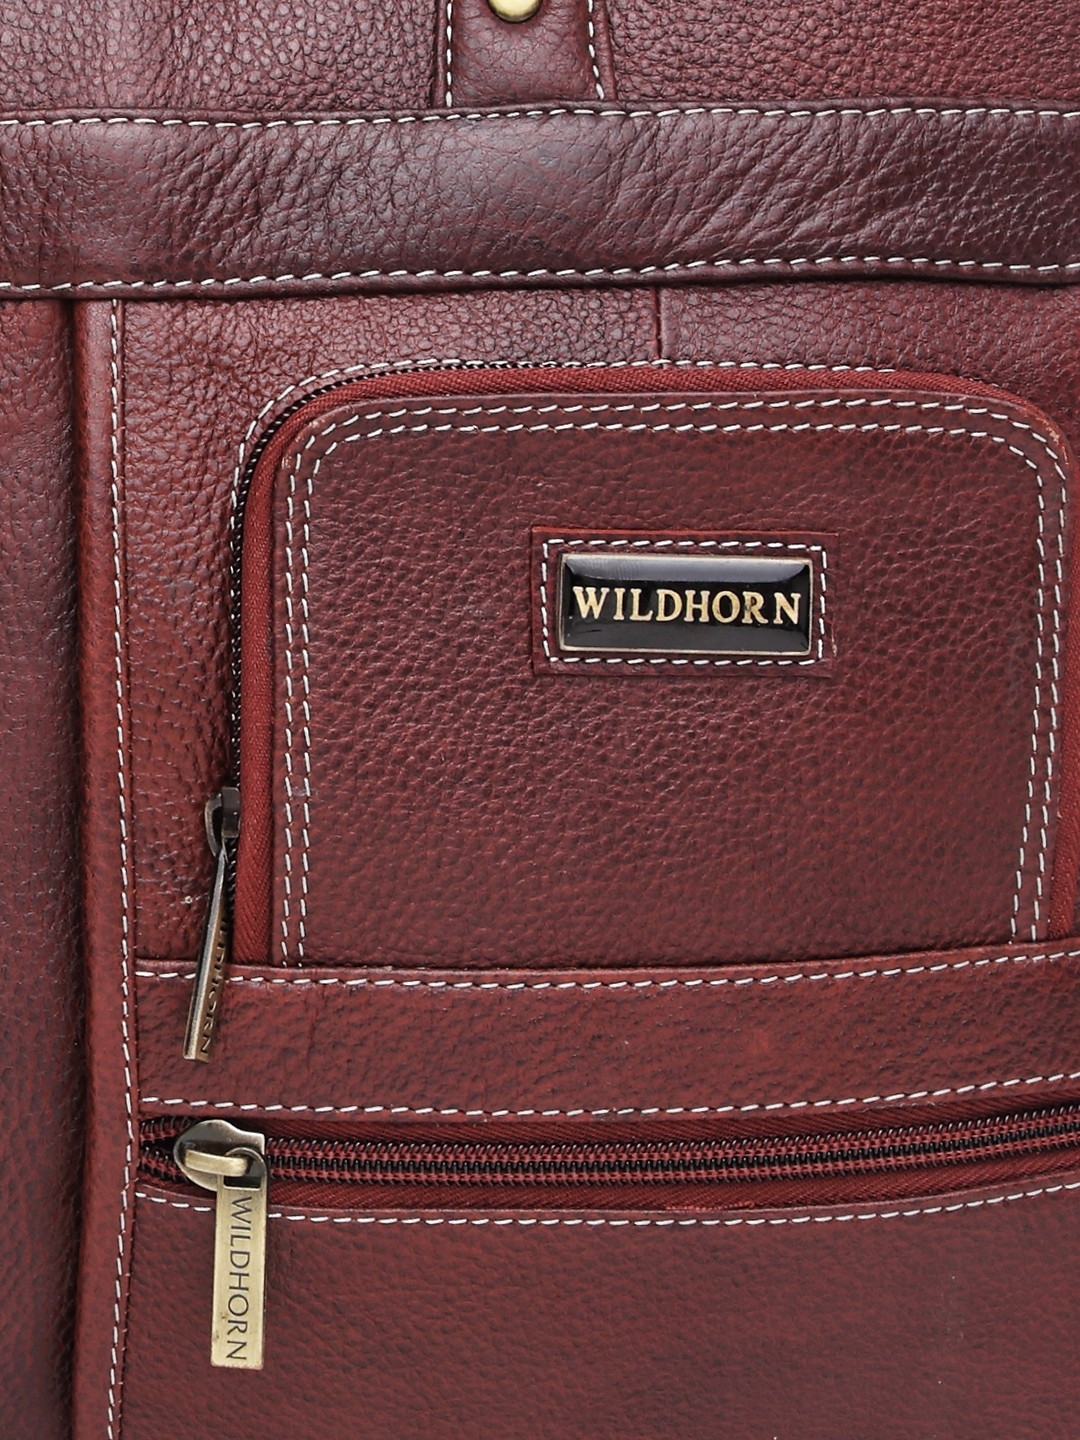 WildHorn | WildHorn Maroon Leather Laptop Messenger Bag for Men| Padded Laptop Compartment |Office Bag  4